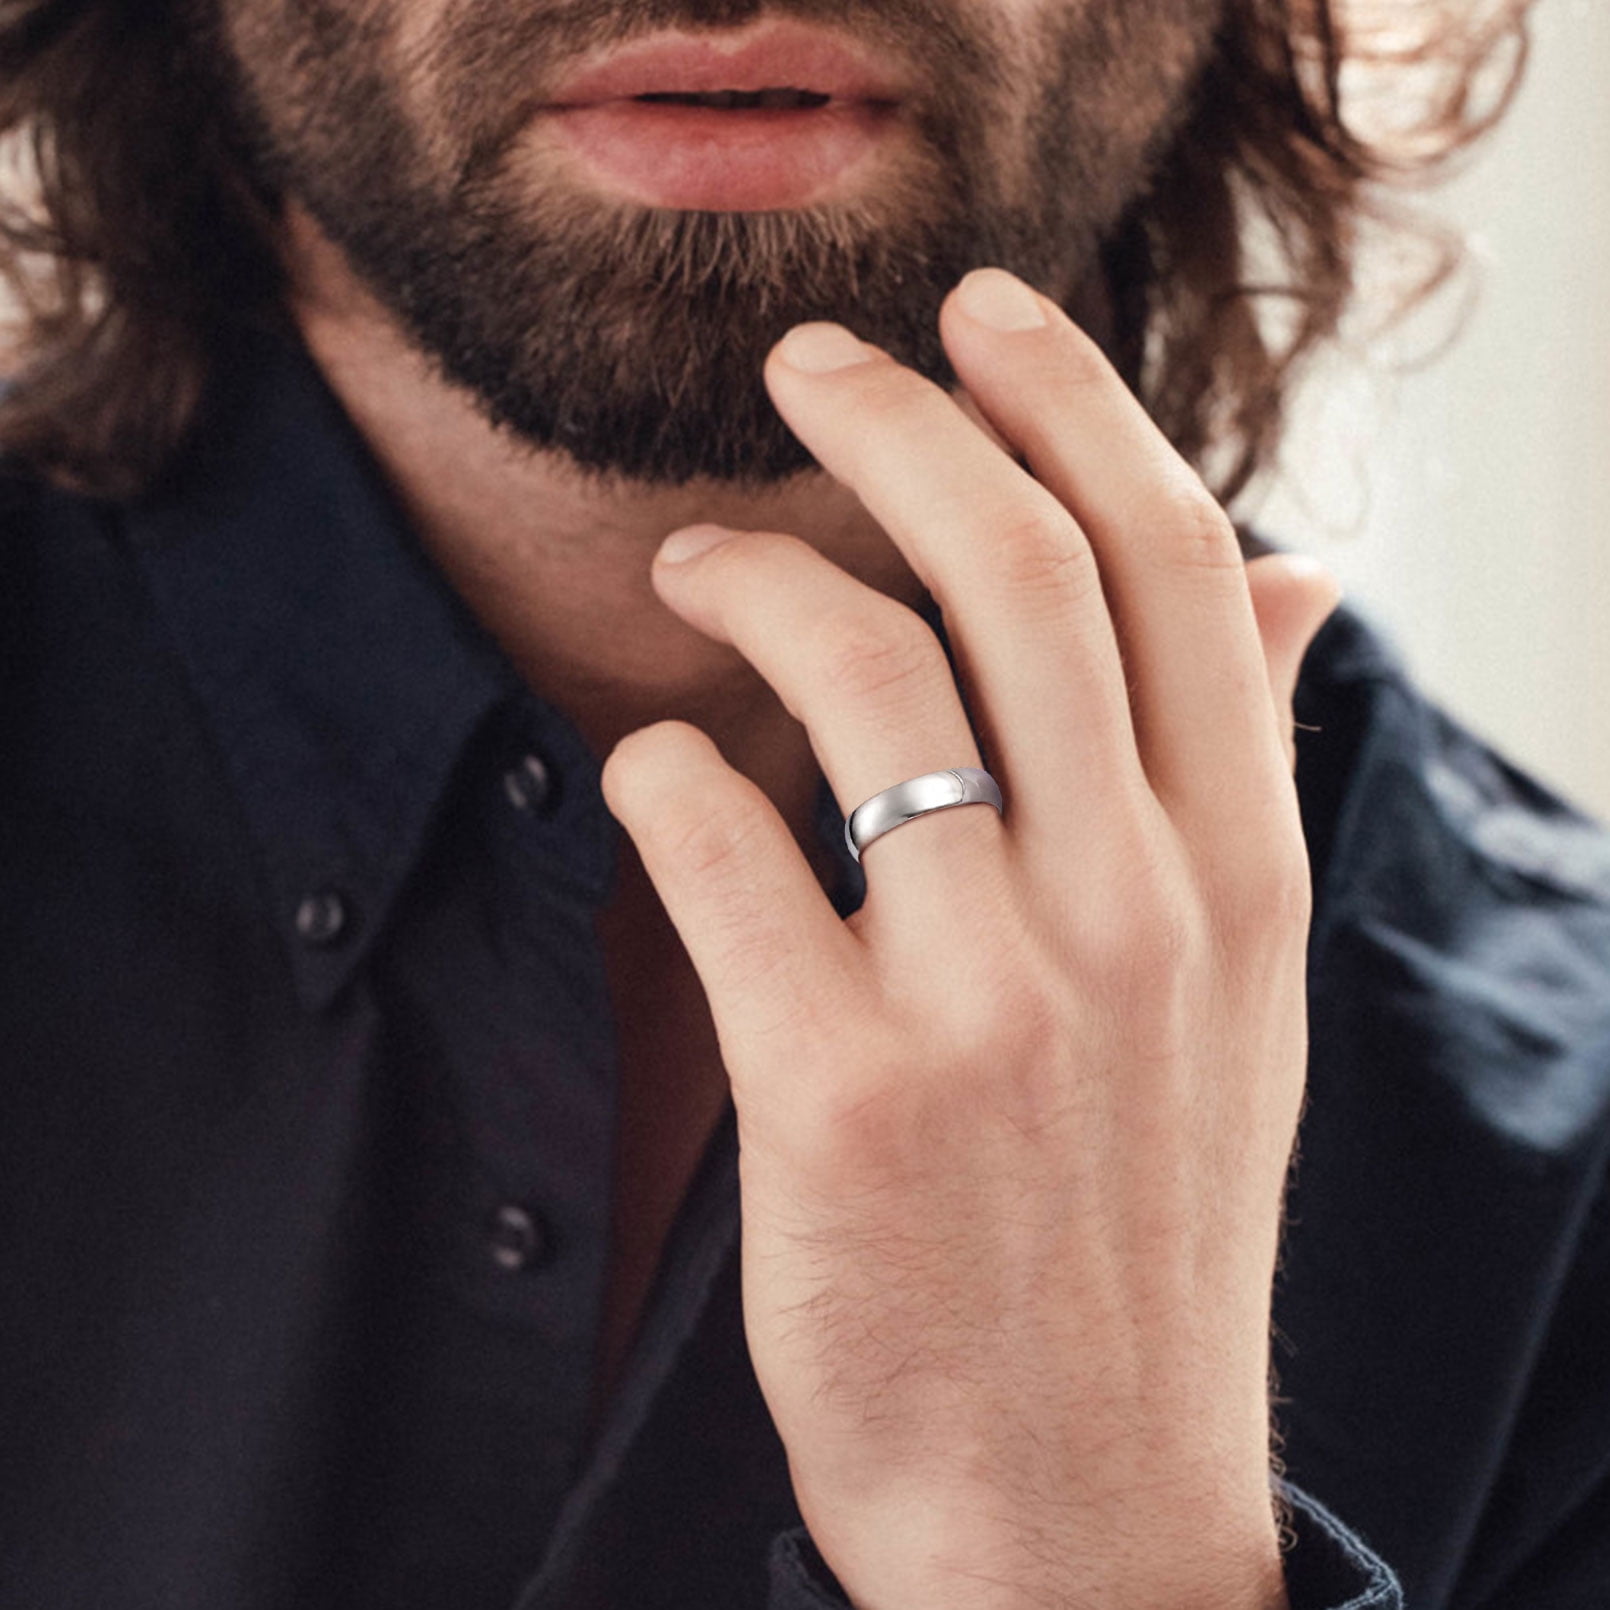 Red Ruby Stone Mens Ring Turkish Handmade Silver Ring 925 - Etsy | Rings  for men, Silver rings handmade, Cool rings for men